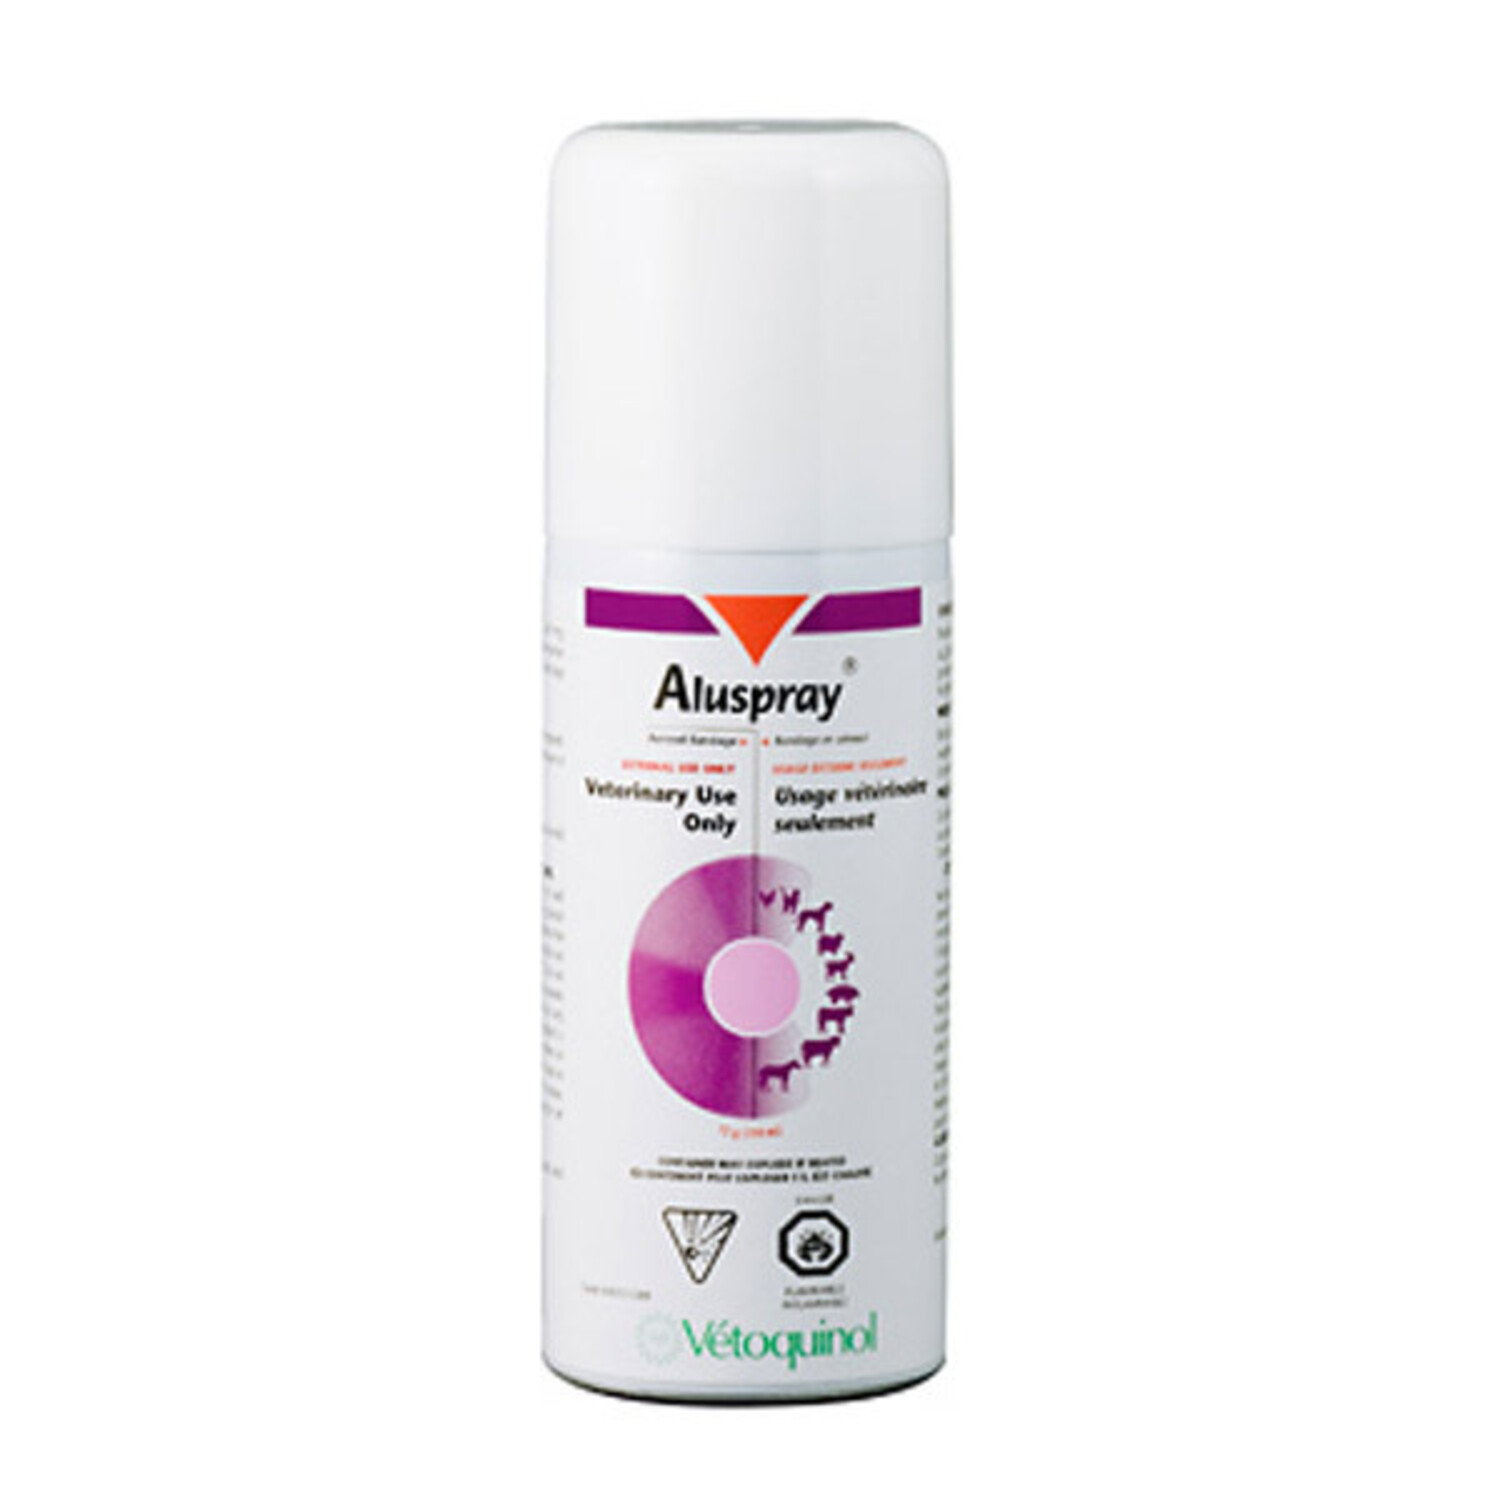 Buy VETOQUINOL Alu Spray Awd Spray at Best Price Online.